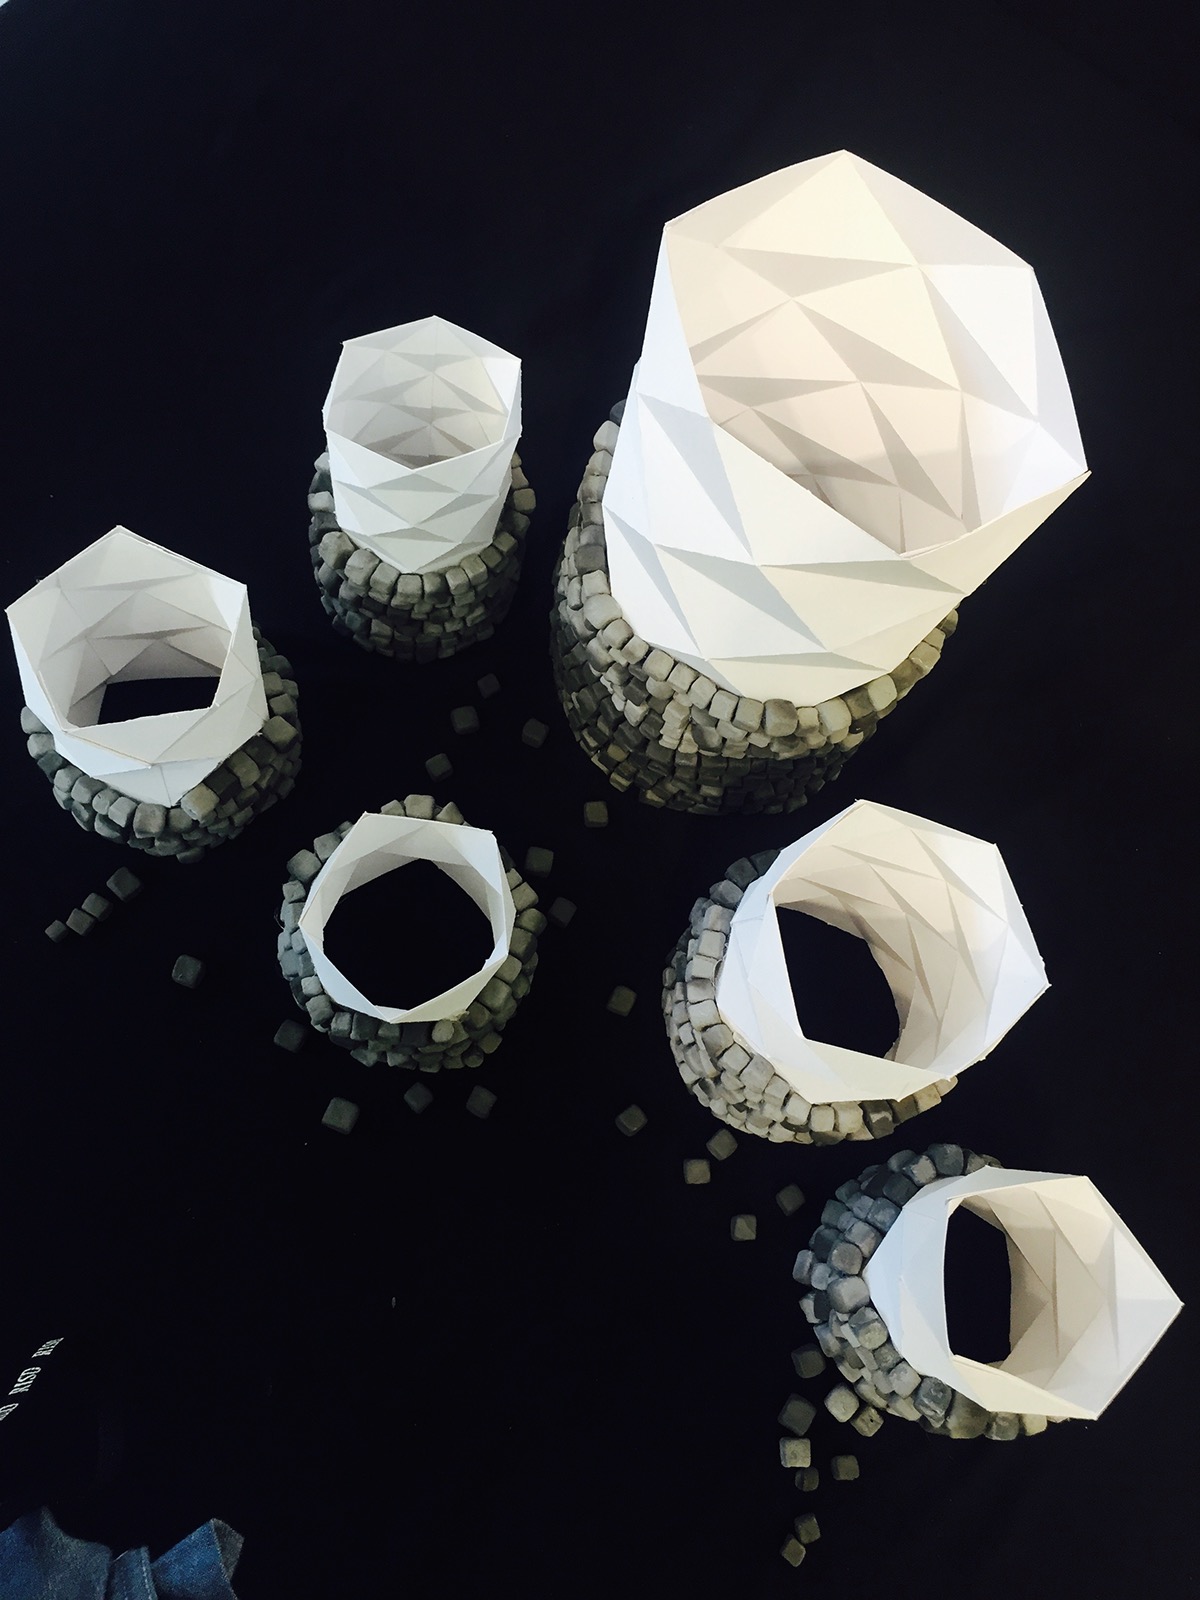 Spring 2015 risd Spatial Dynamics foundation studies cladin Paperfolding sculpture